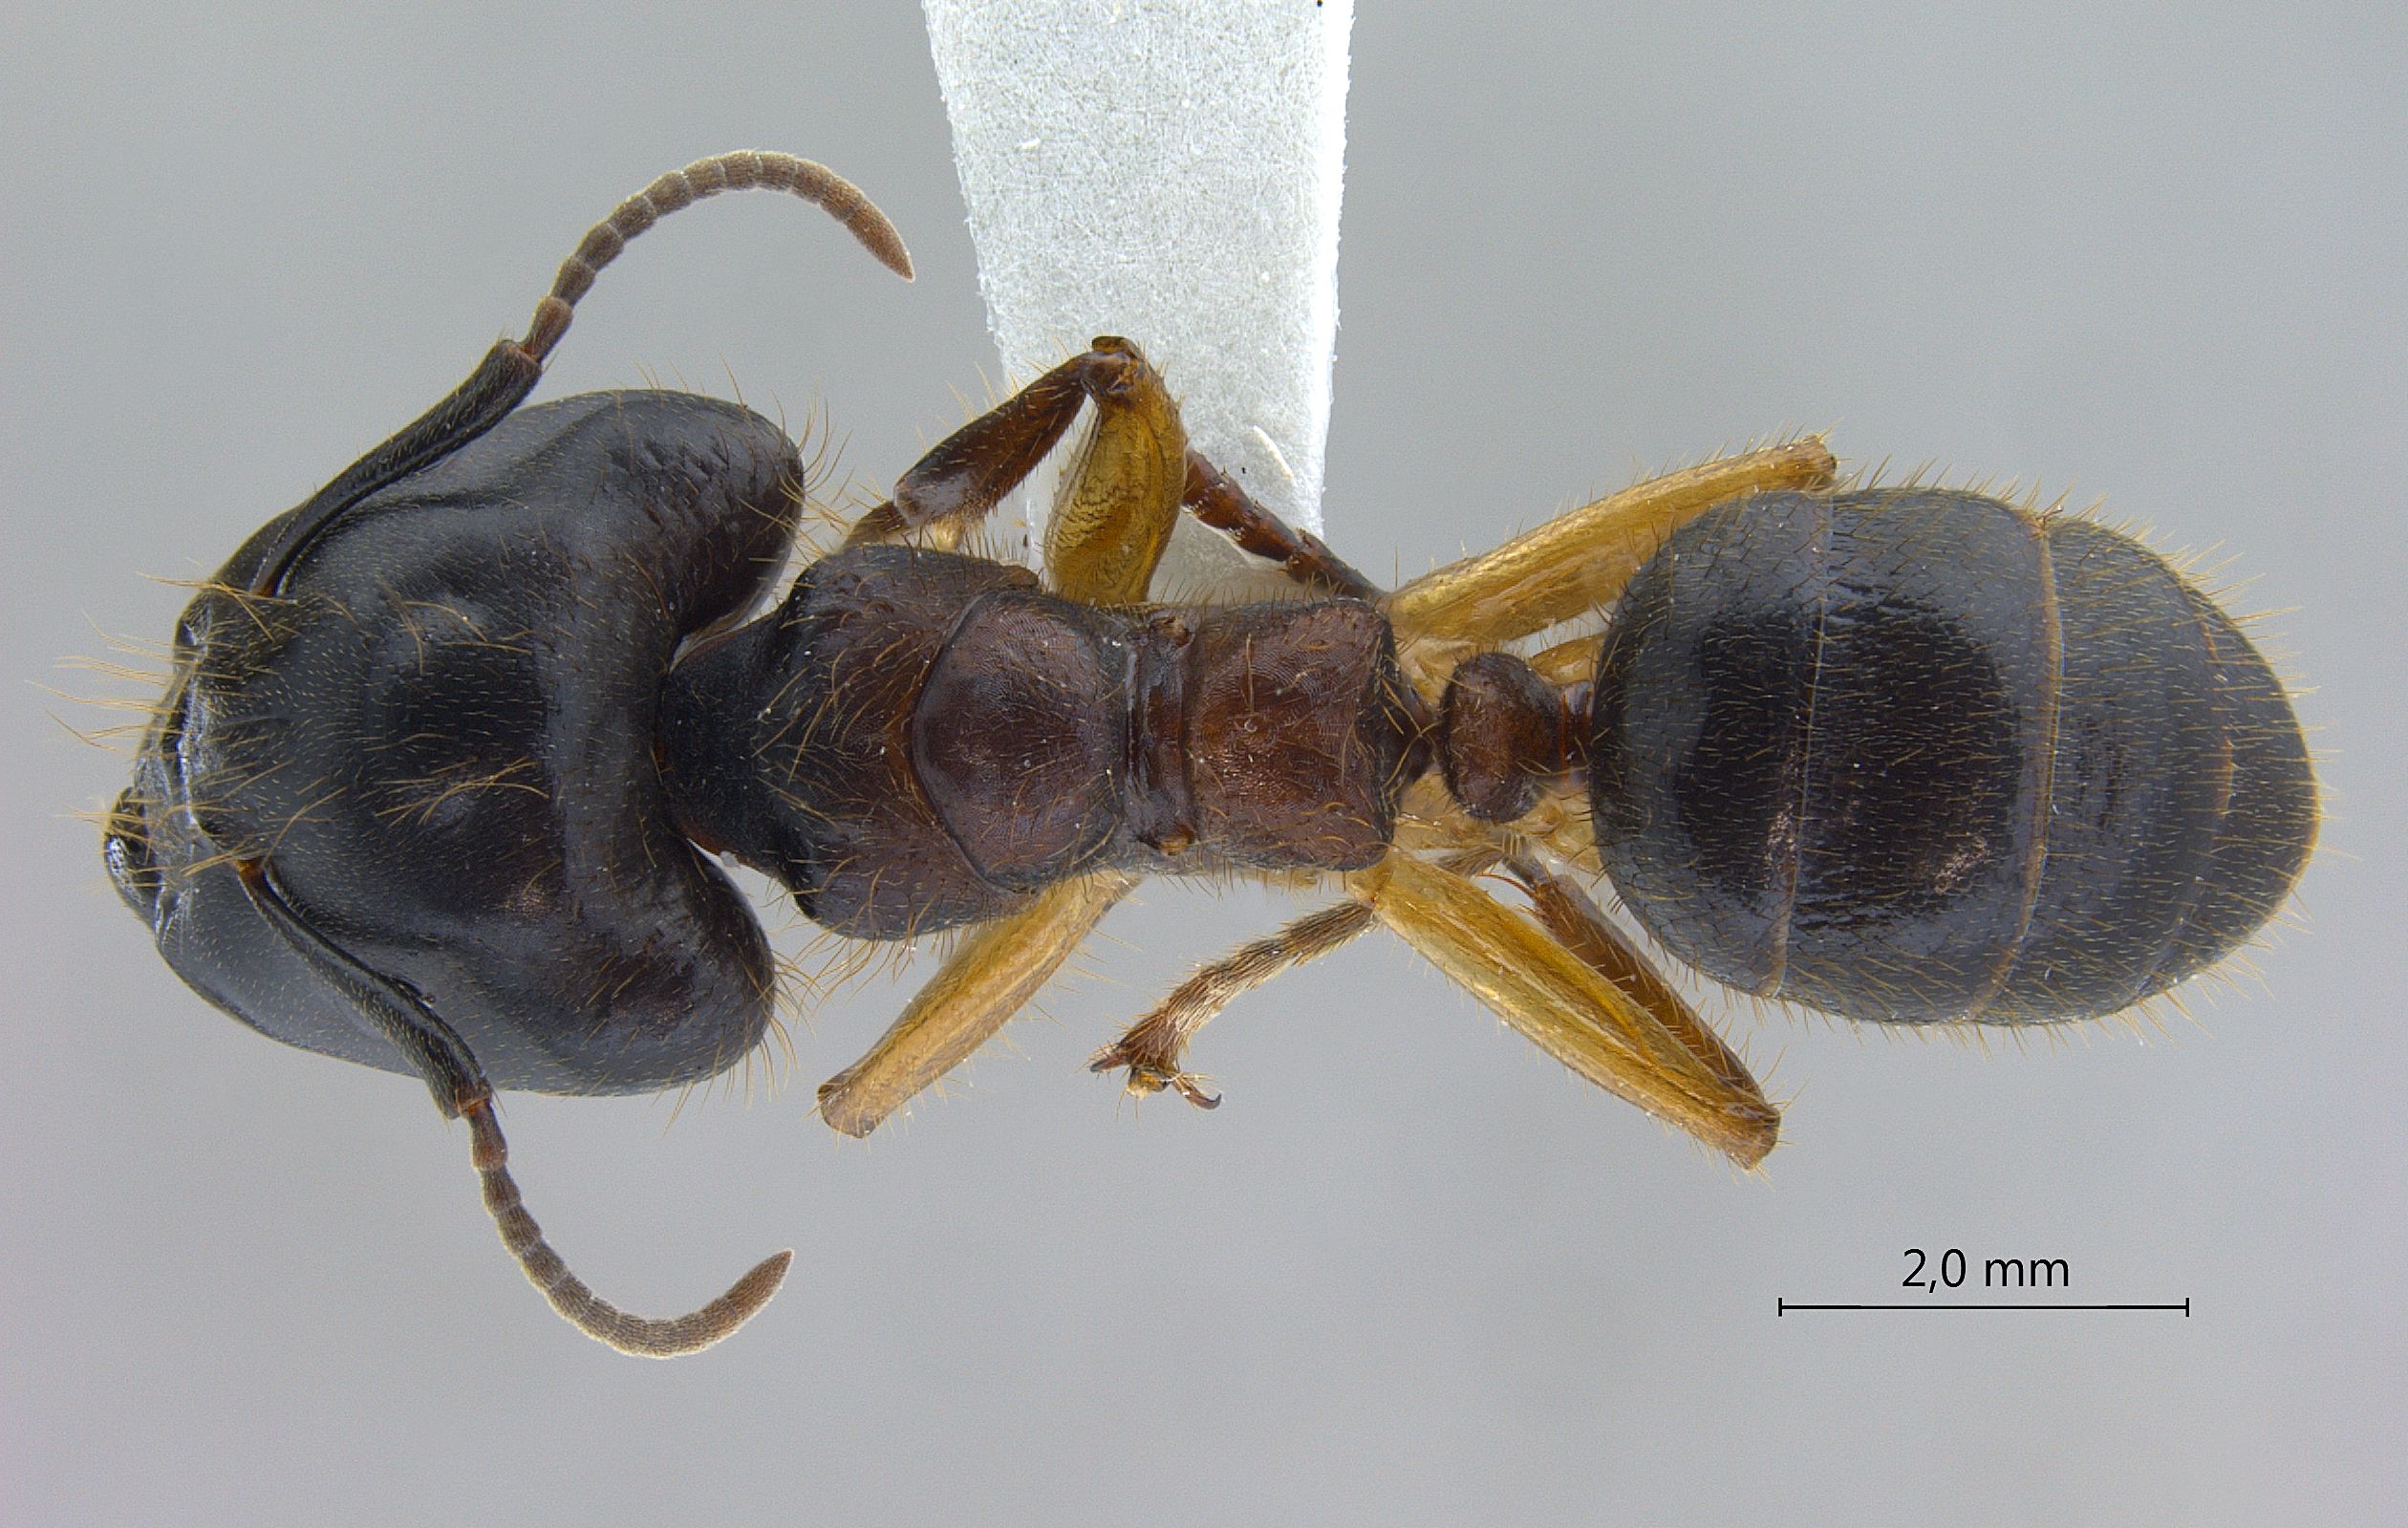 Camponotus megalonyx major dorsal